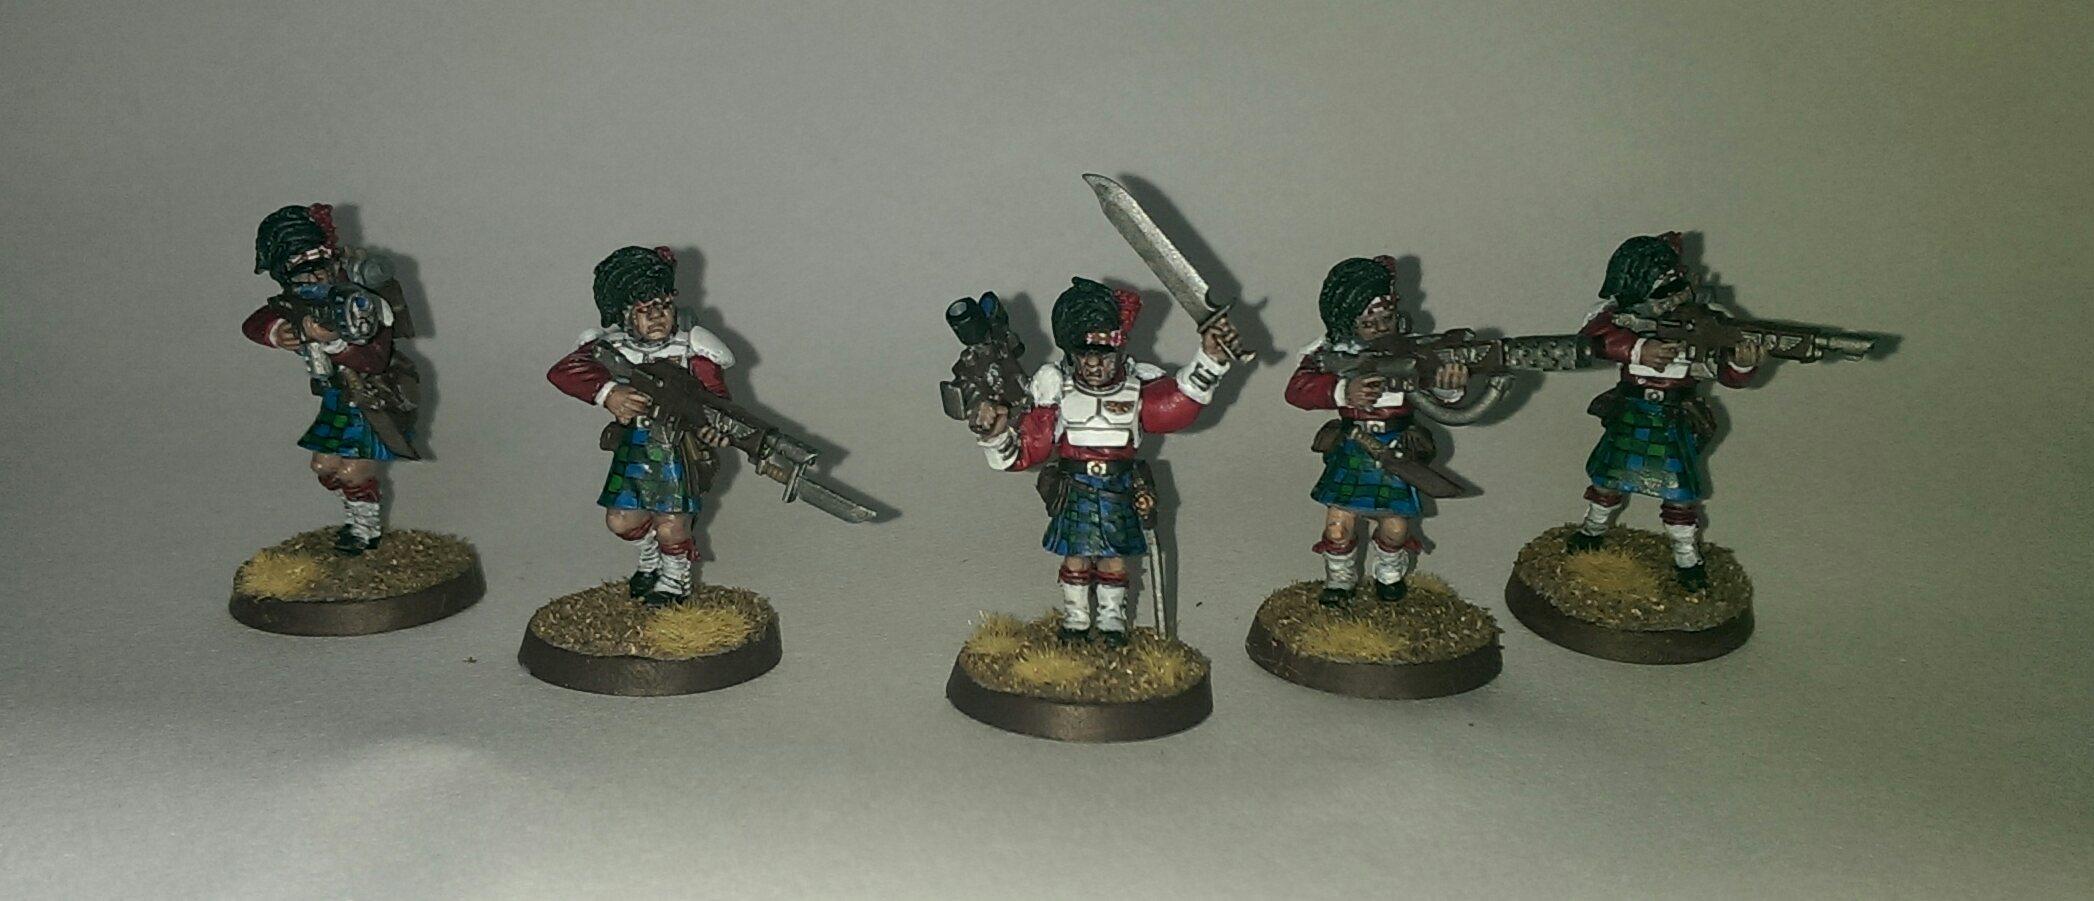 Highland, Imperial Guard, Scion, Vic, Victoria Miniatures